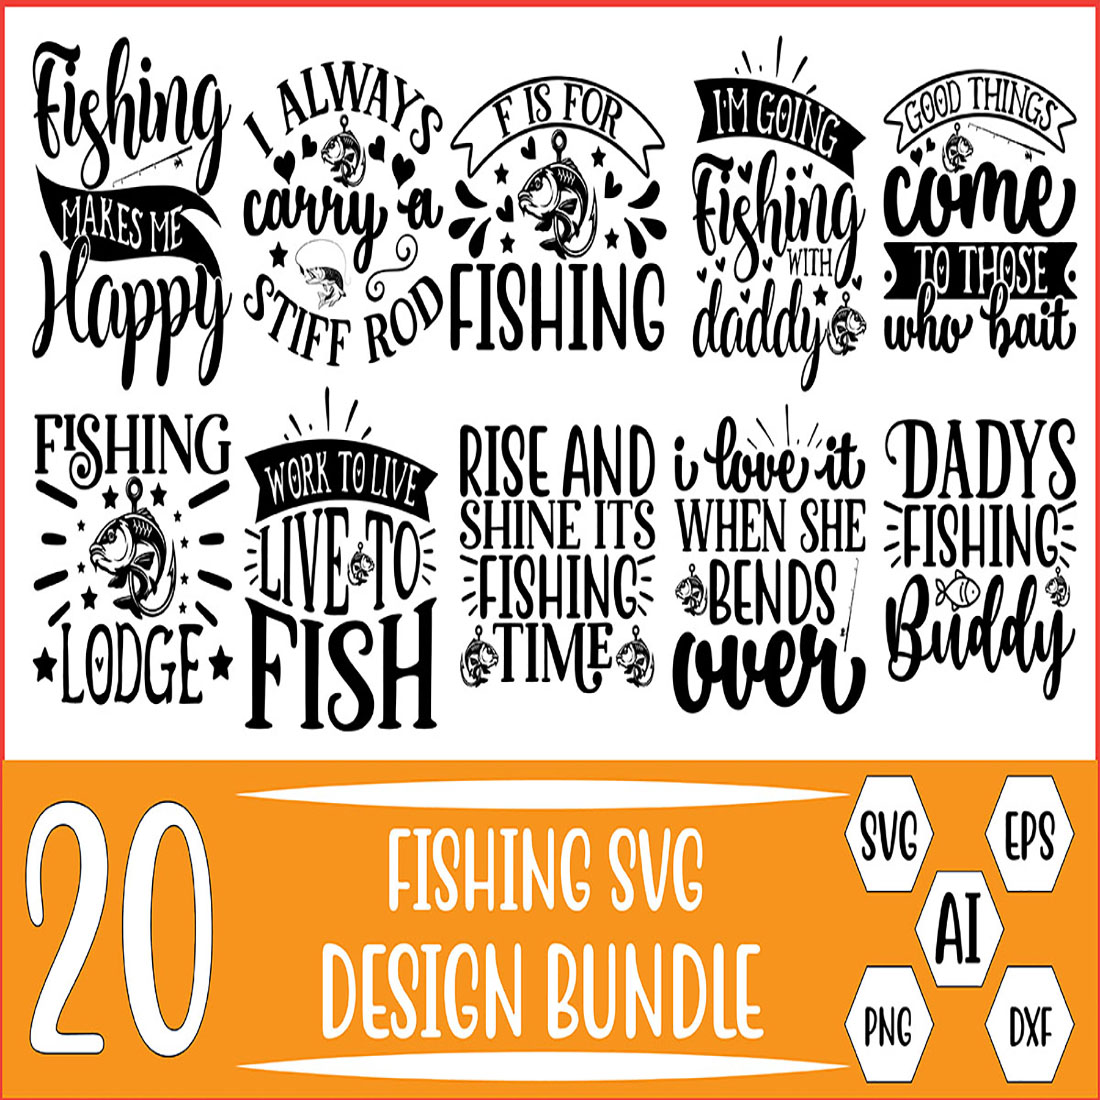 20 Fishing Svg Design Bundle Vector Template cover image.